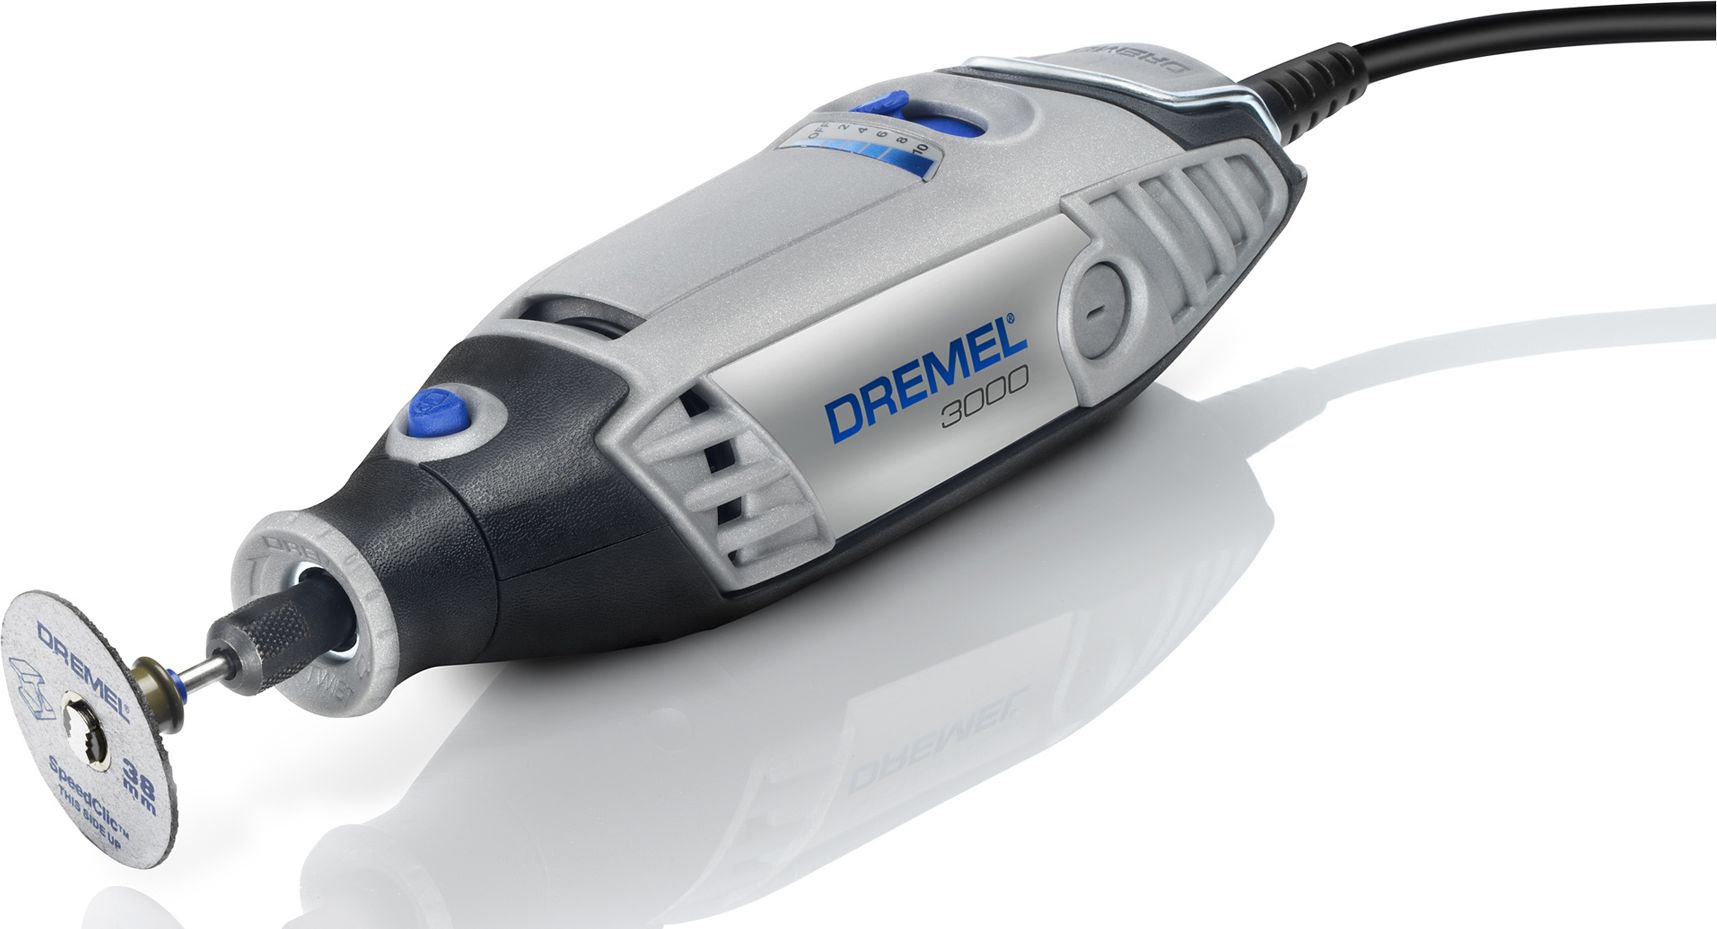 Dremel Multifunction device 3000-5 + accessories (F0133000JW)